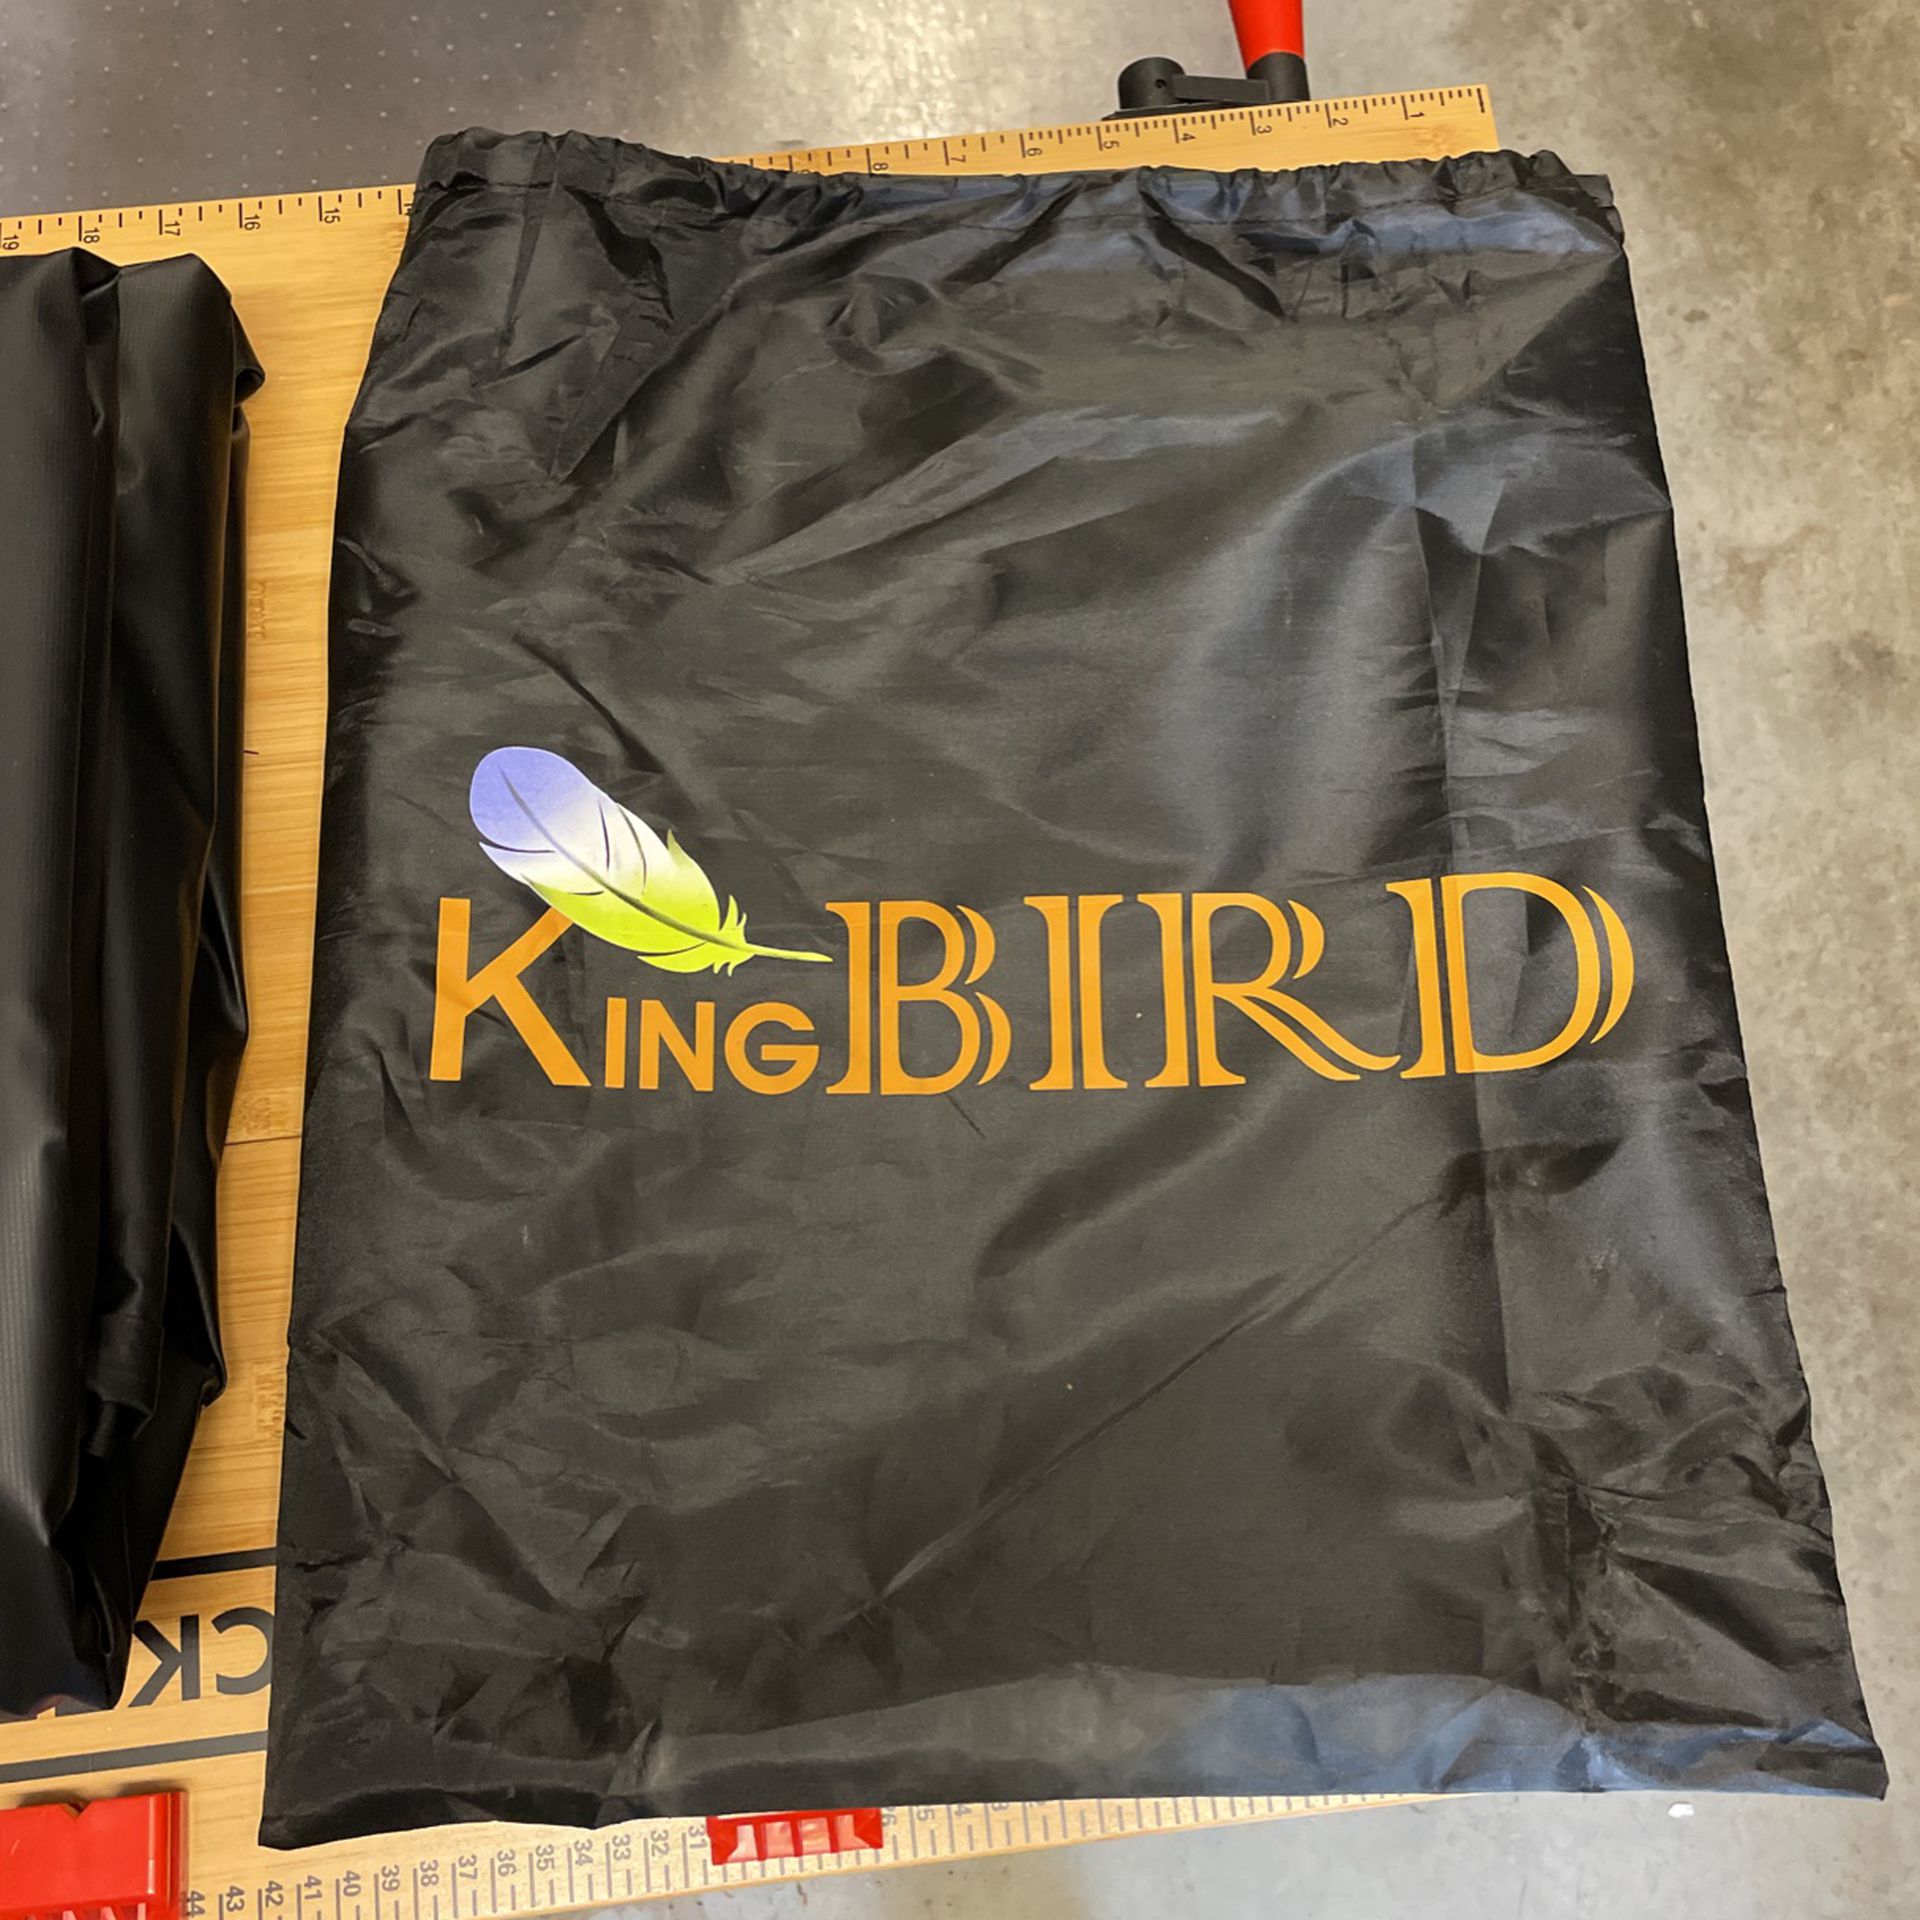 Jeep Accessory - Kingbird Waterproof Bag